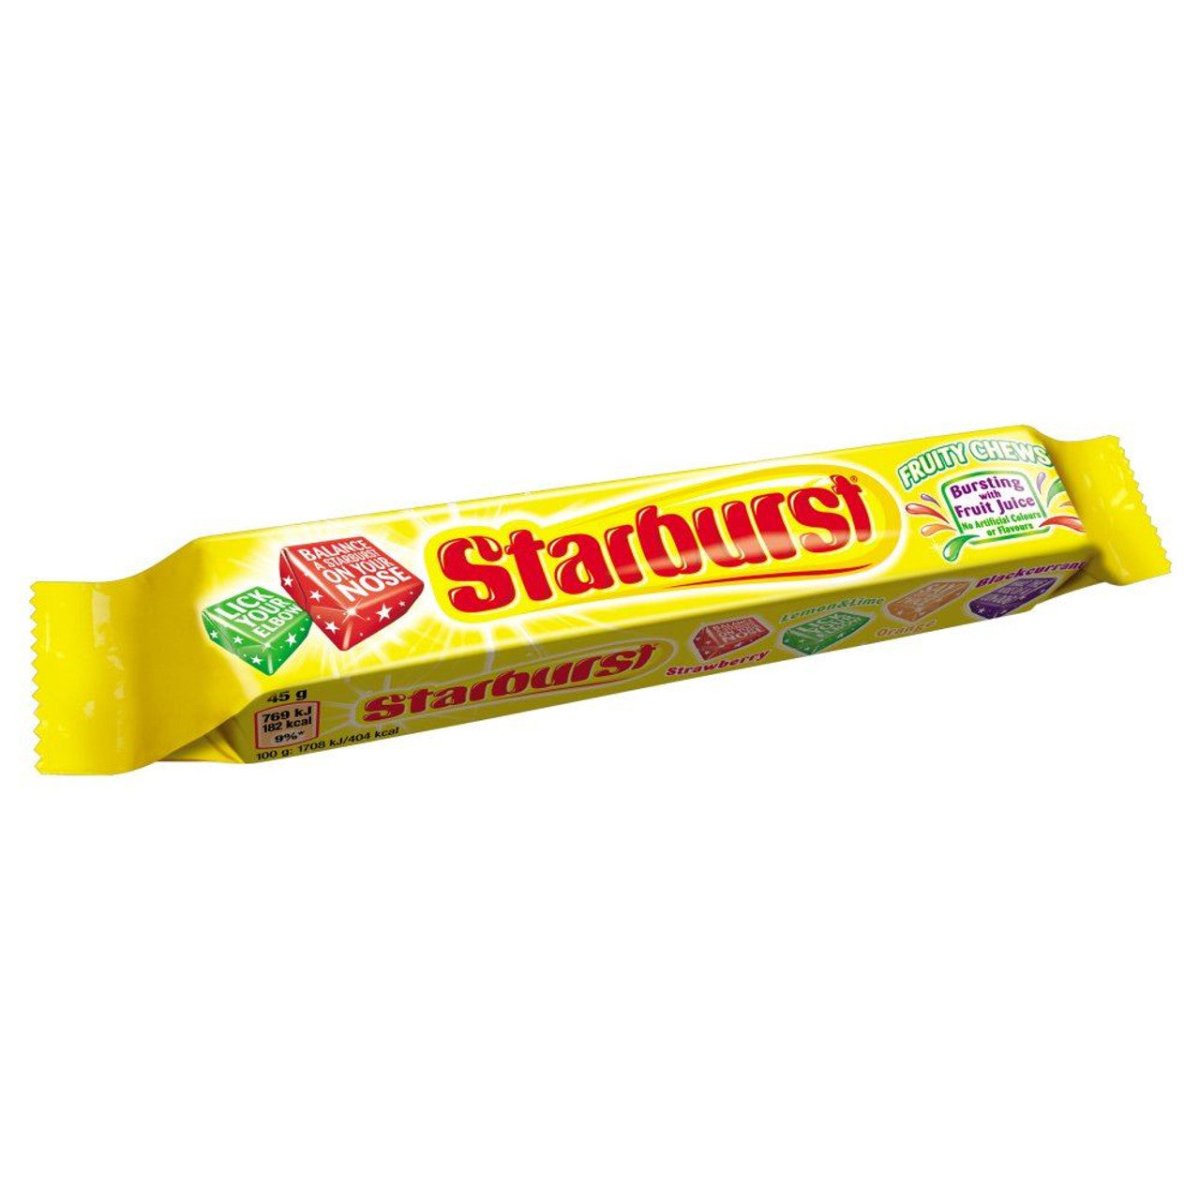 Starburst Original Fruit Chews 45g - Candy Mail UK